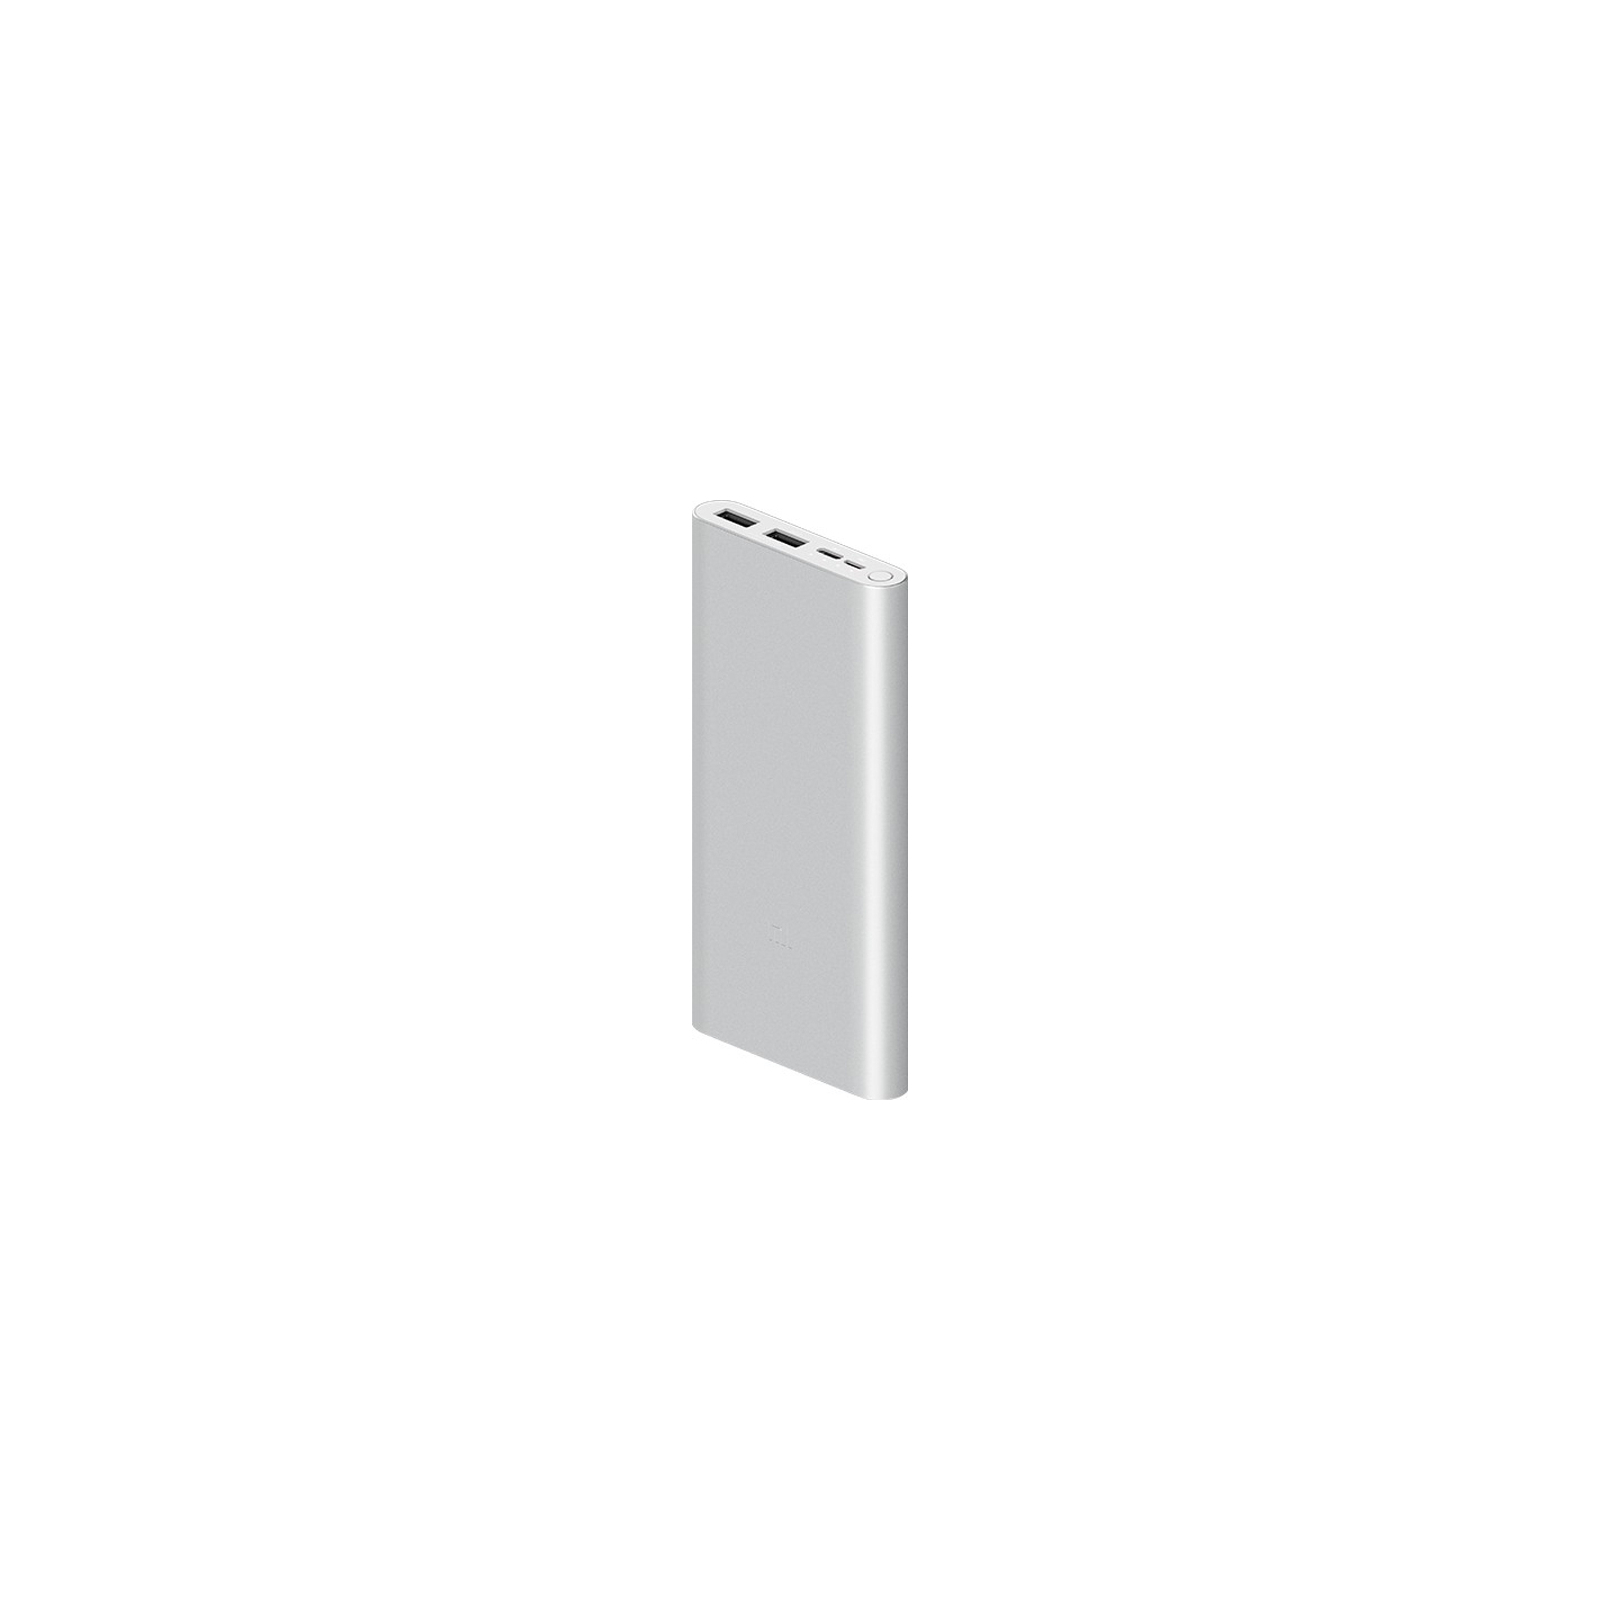 Батарея универсальная Xiaomi Mi 3 NEW Power bank 10000mAh QC2.0 in/out, PLM13ZM, Silver (VXN4259CN / 575608) изображение 2